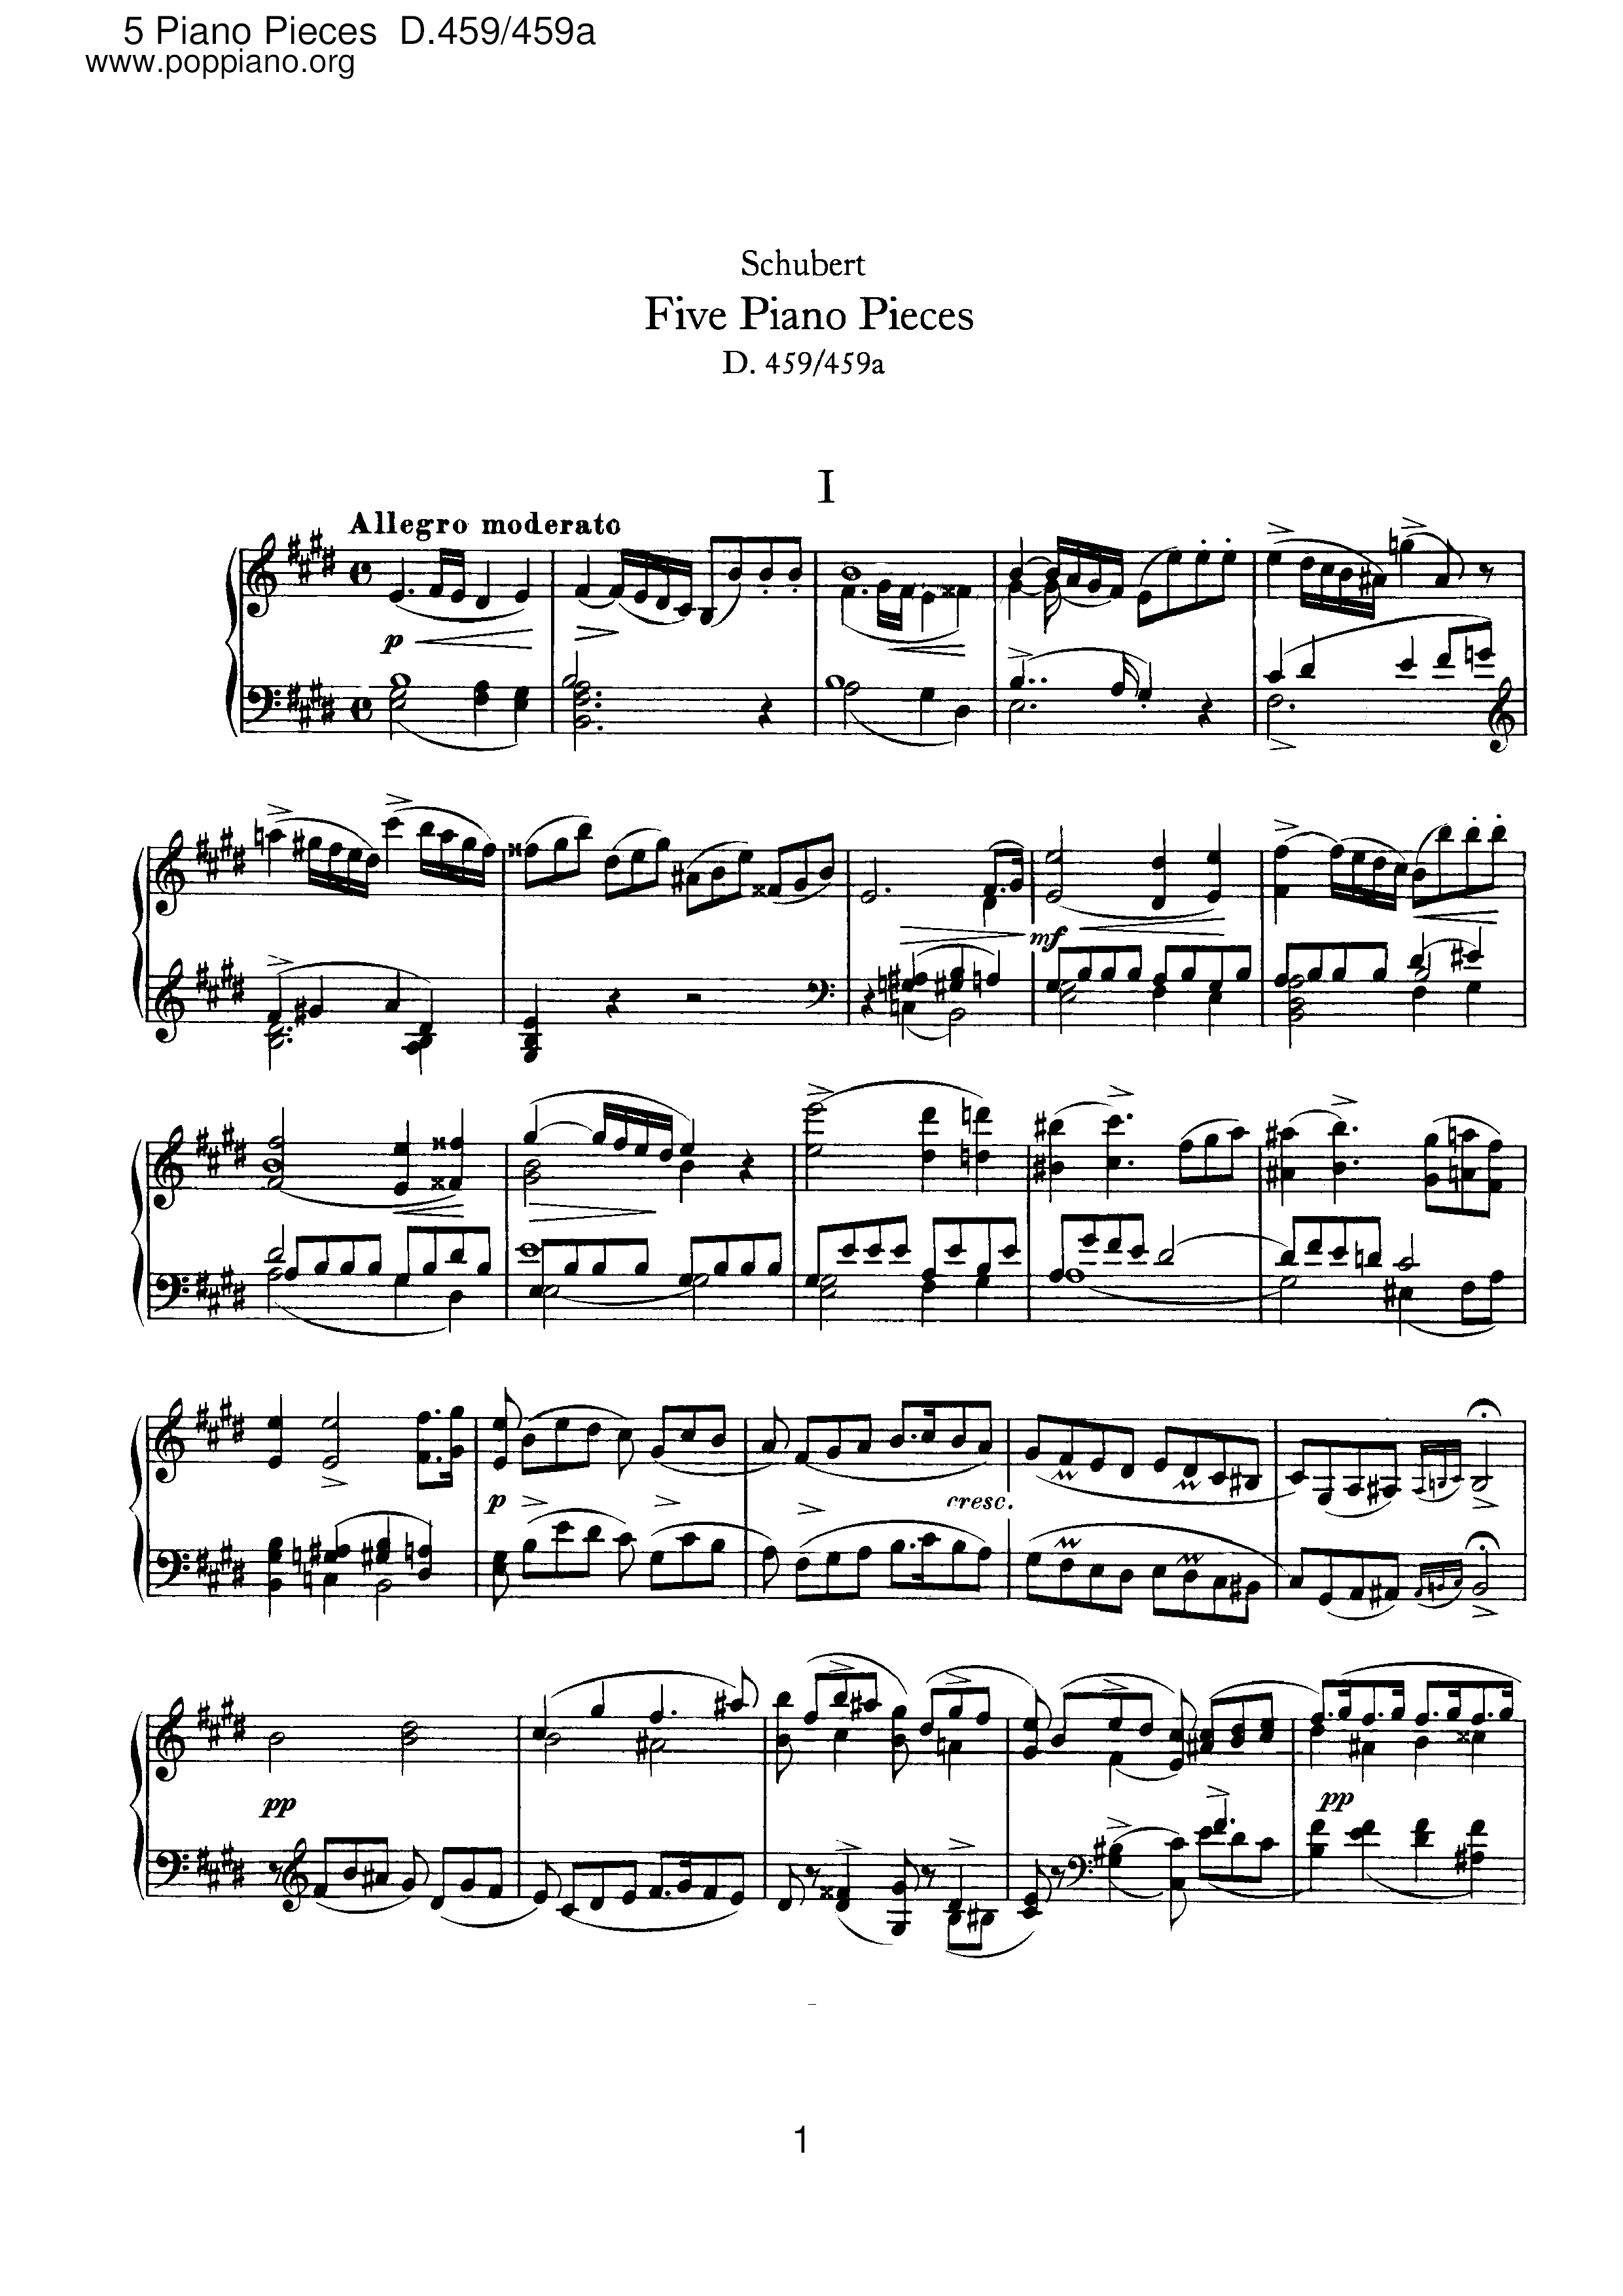 5 Piano Pieces, D.459/459a Score